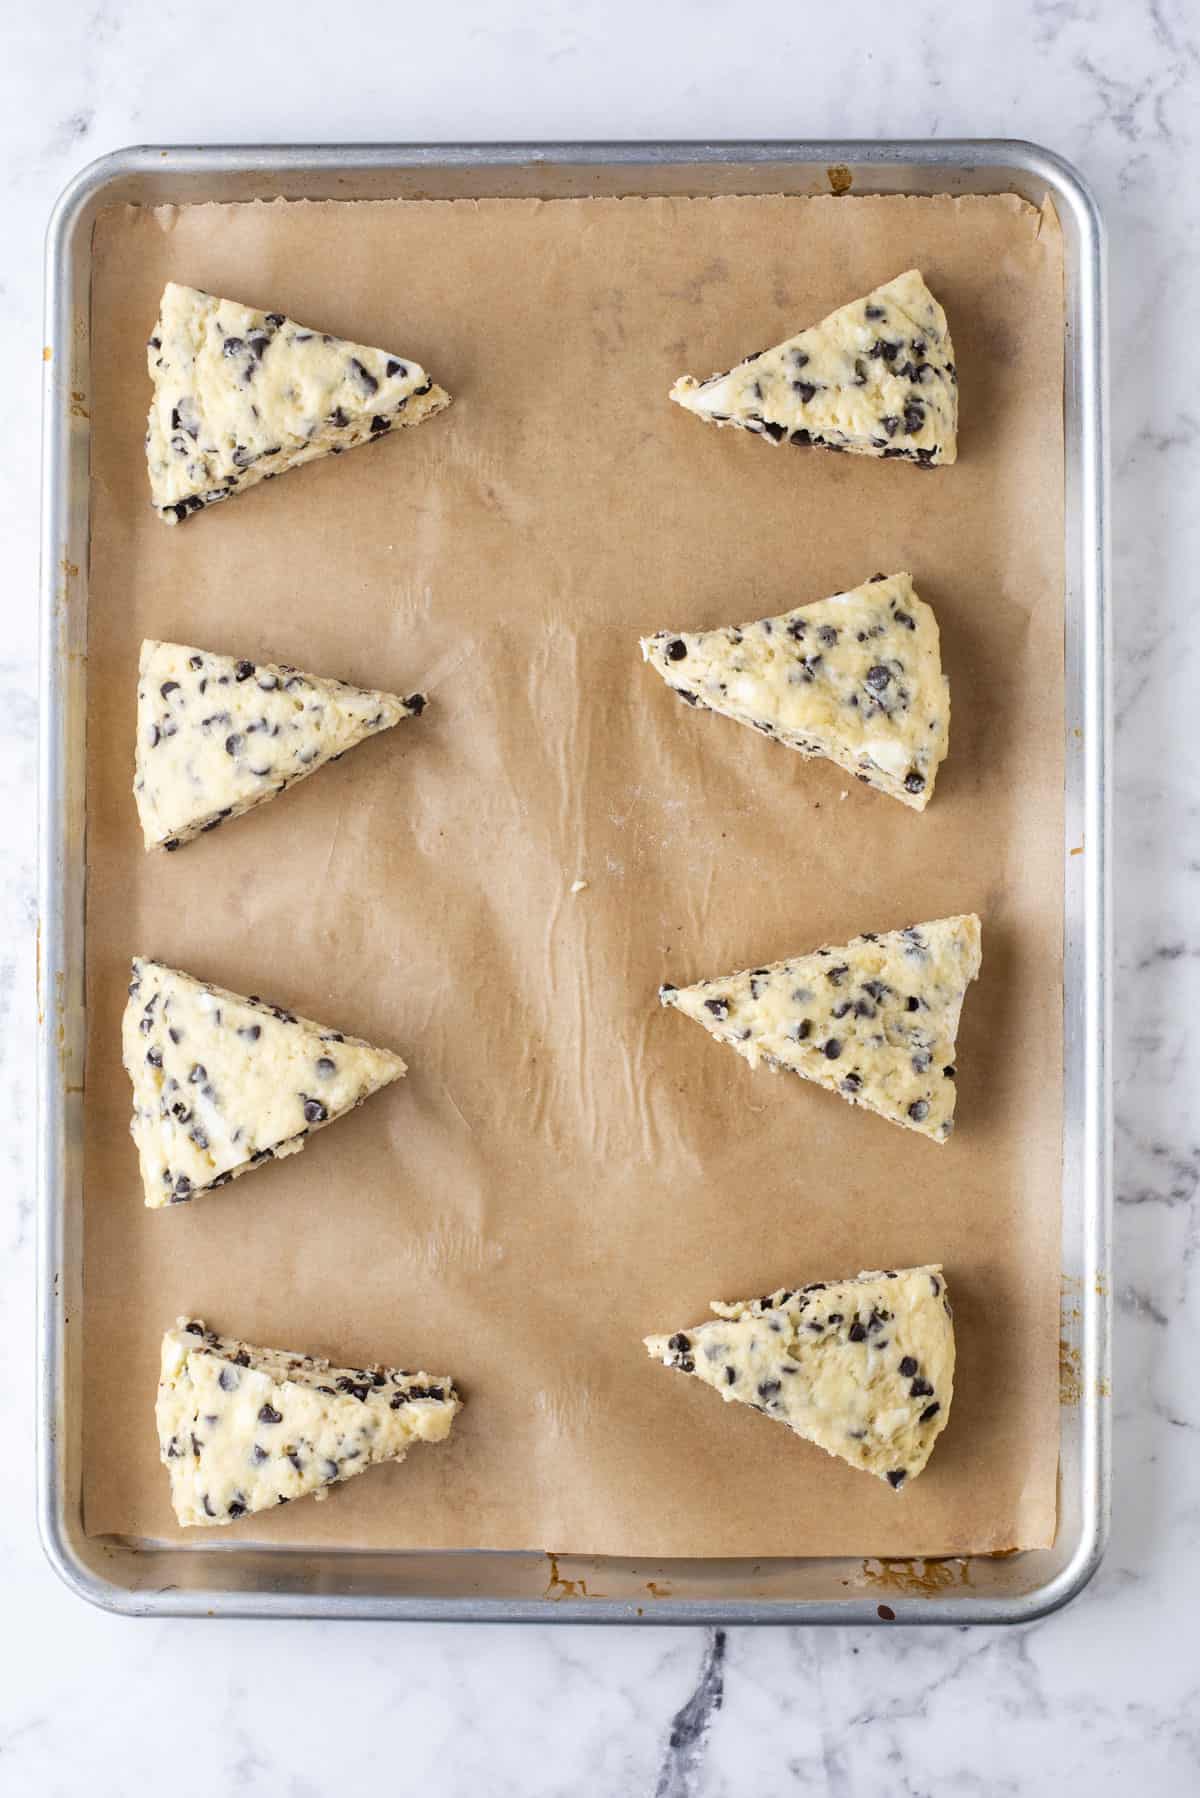 8 chocolate chip scones on baking sheet